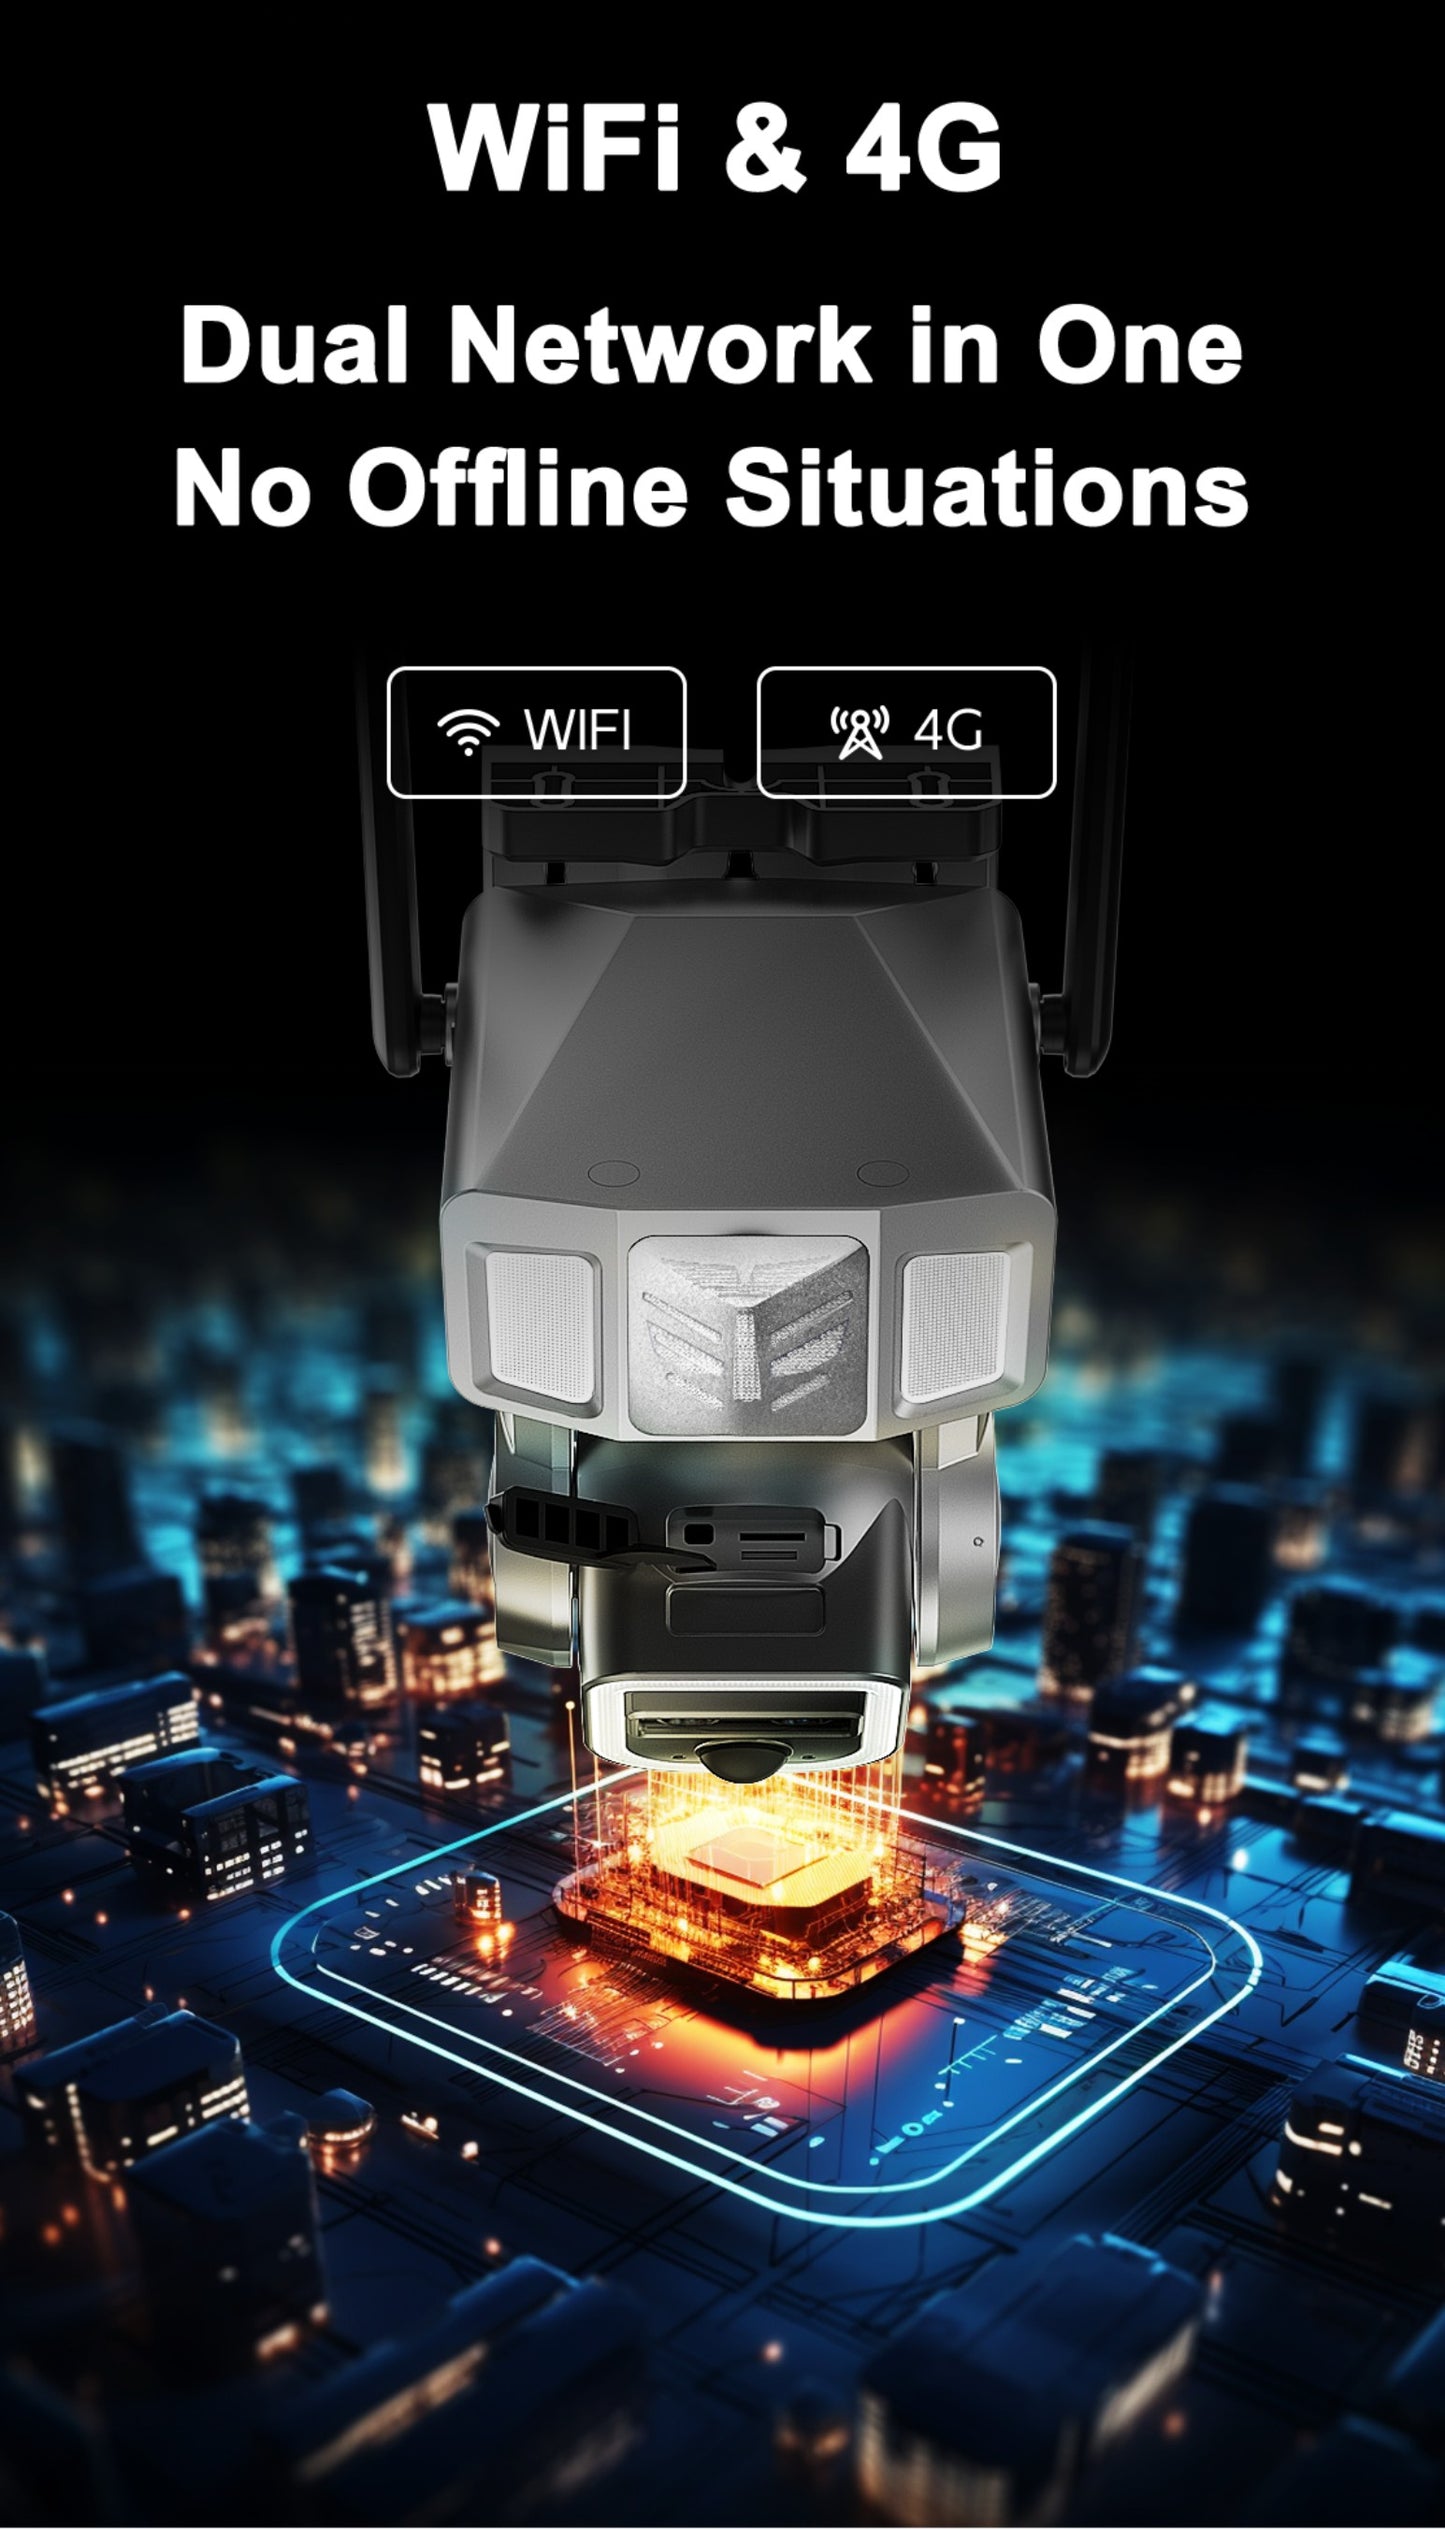 CRONY Y7B 4G-4K-8MP Solar Dual-lens Continuous Zoom Camera